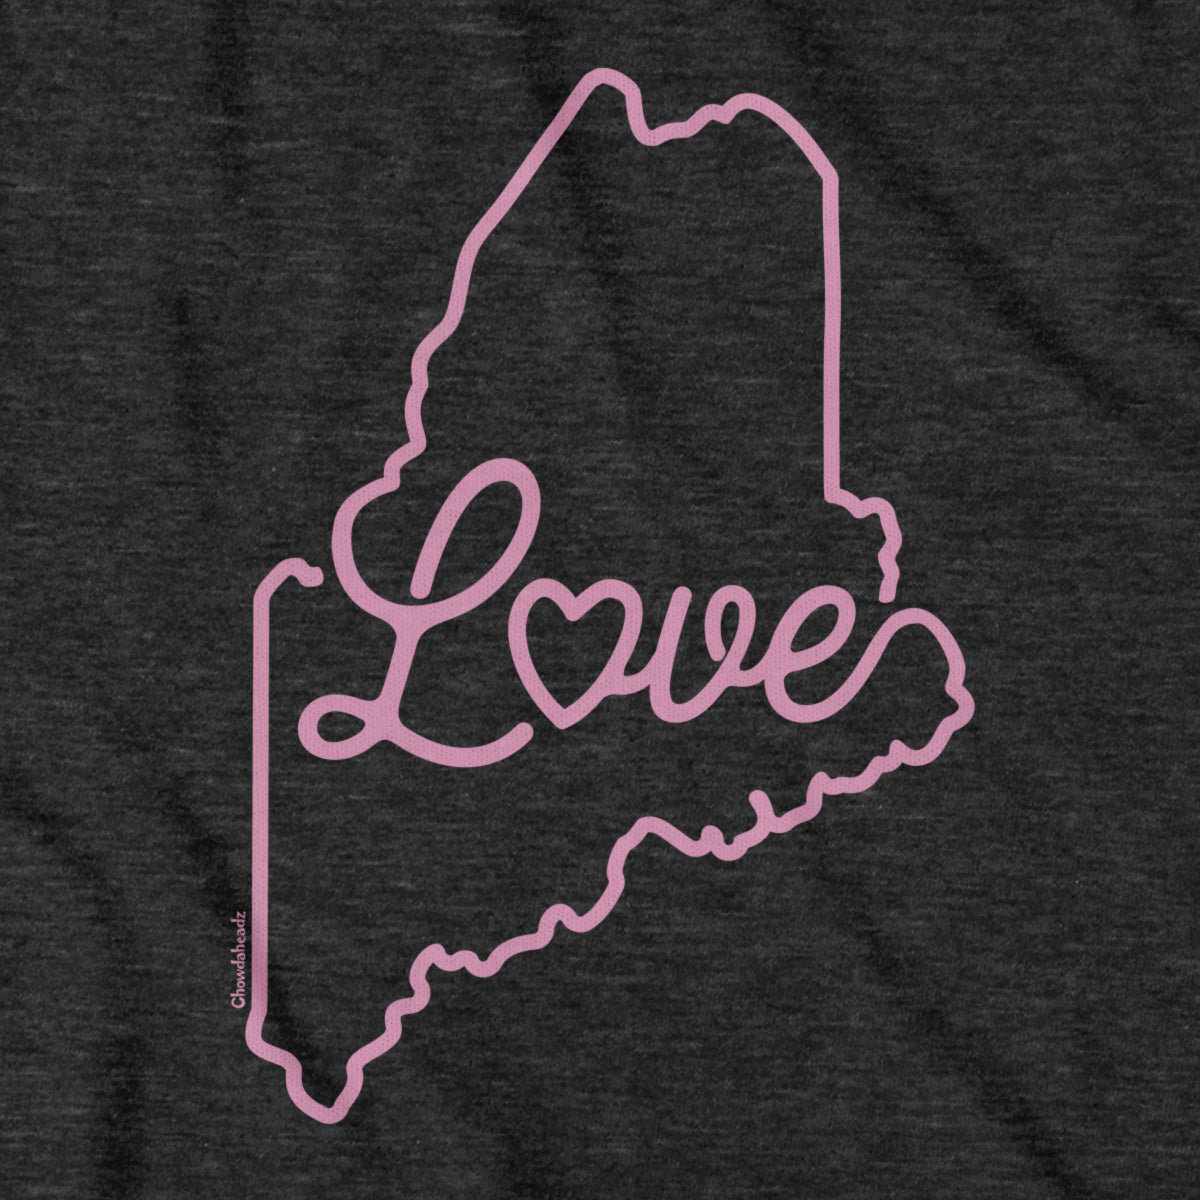 Love Maine Script T-Shirt - Chowdaheadz